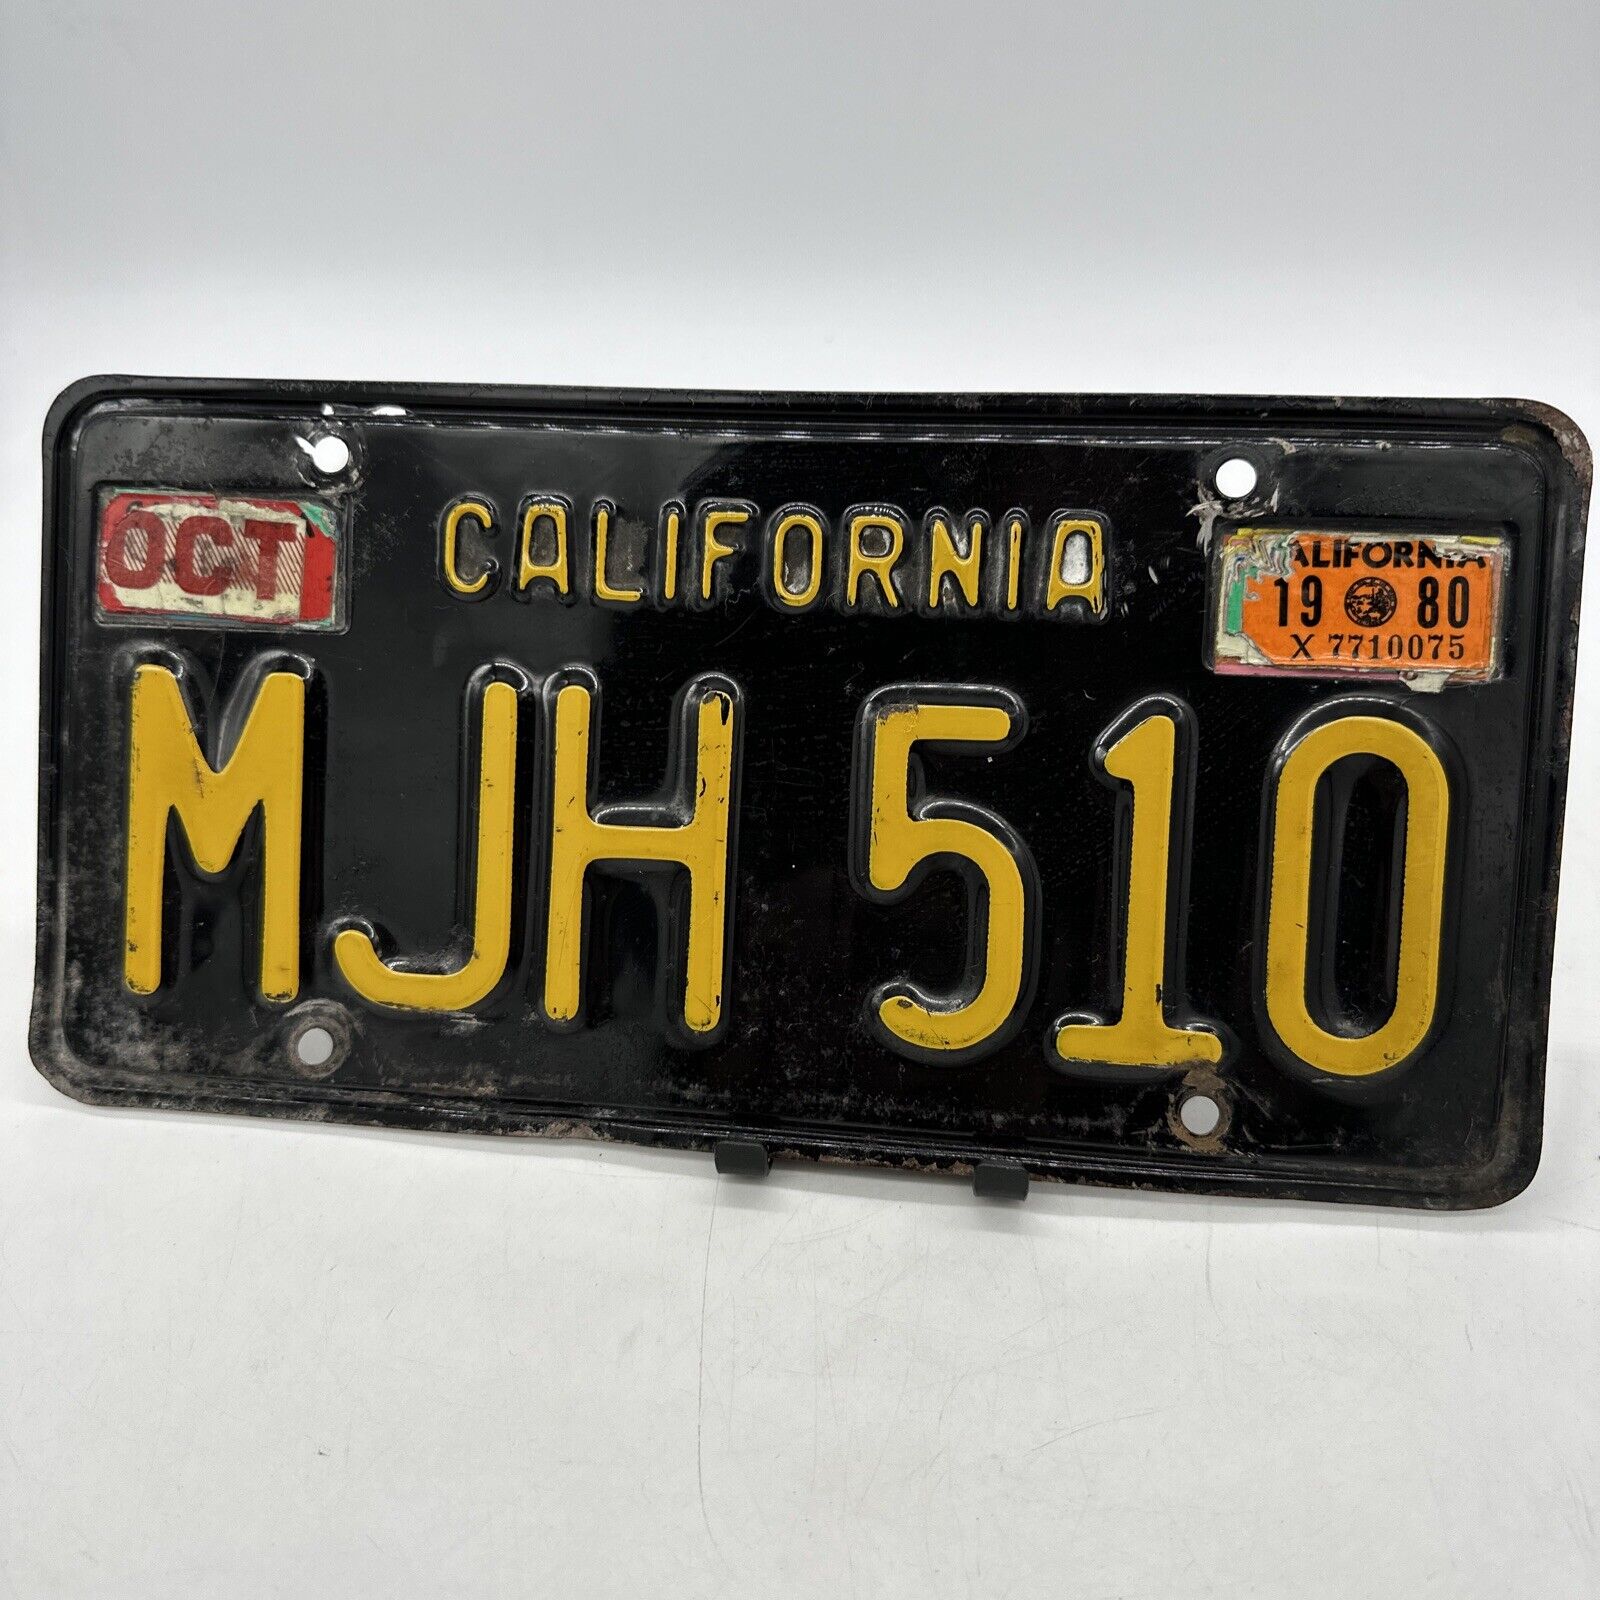 Vintage California 1963 Black License Plate MJH 510 with 1980 Expiration Sticker